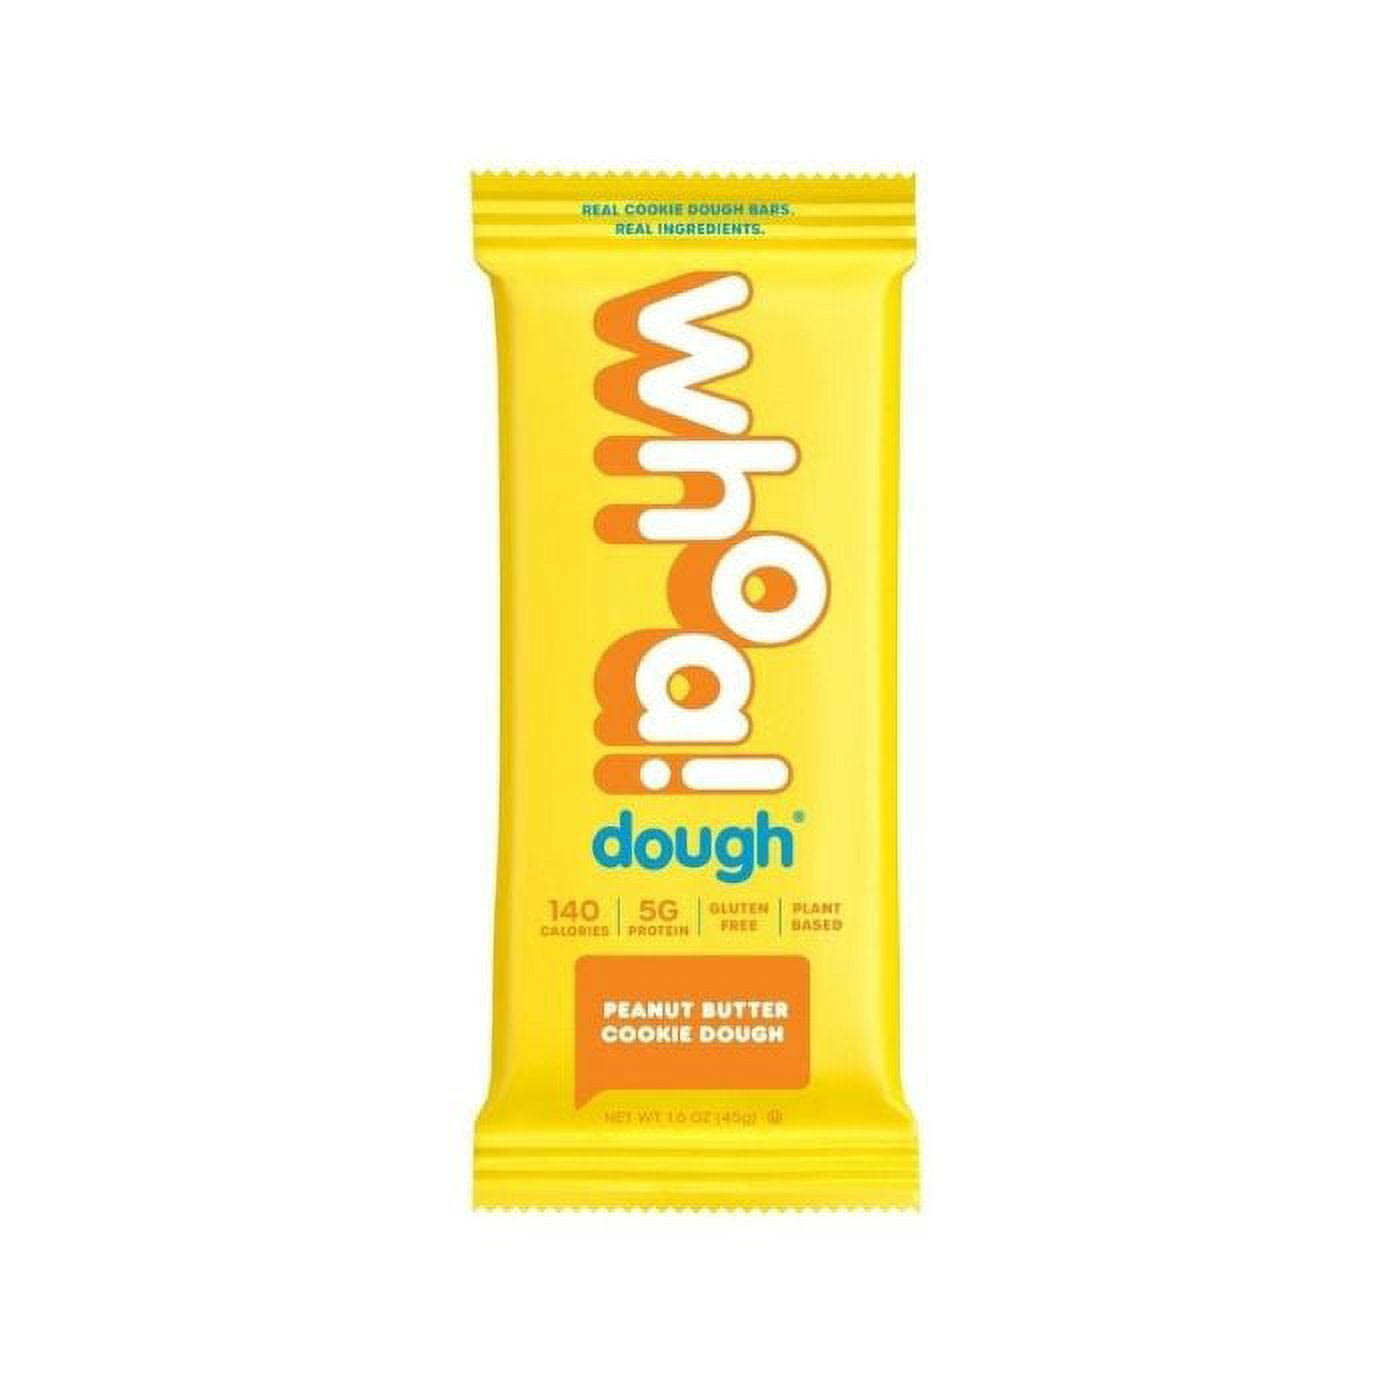 WHOA DOUGH Edible Cookie Dough Bars, Plant Based, Gluten Free, Vegan,